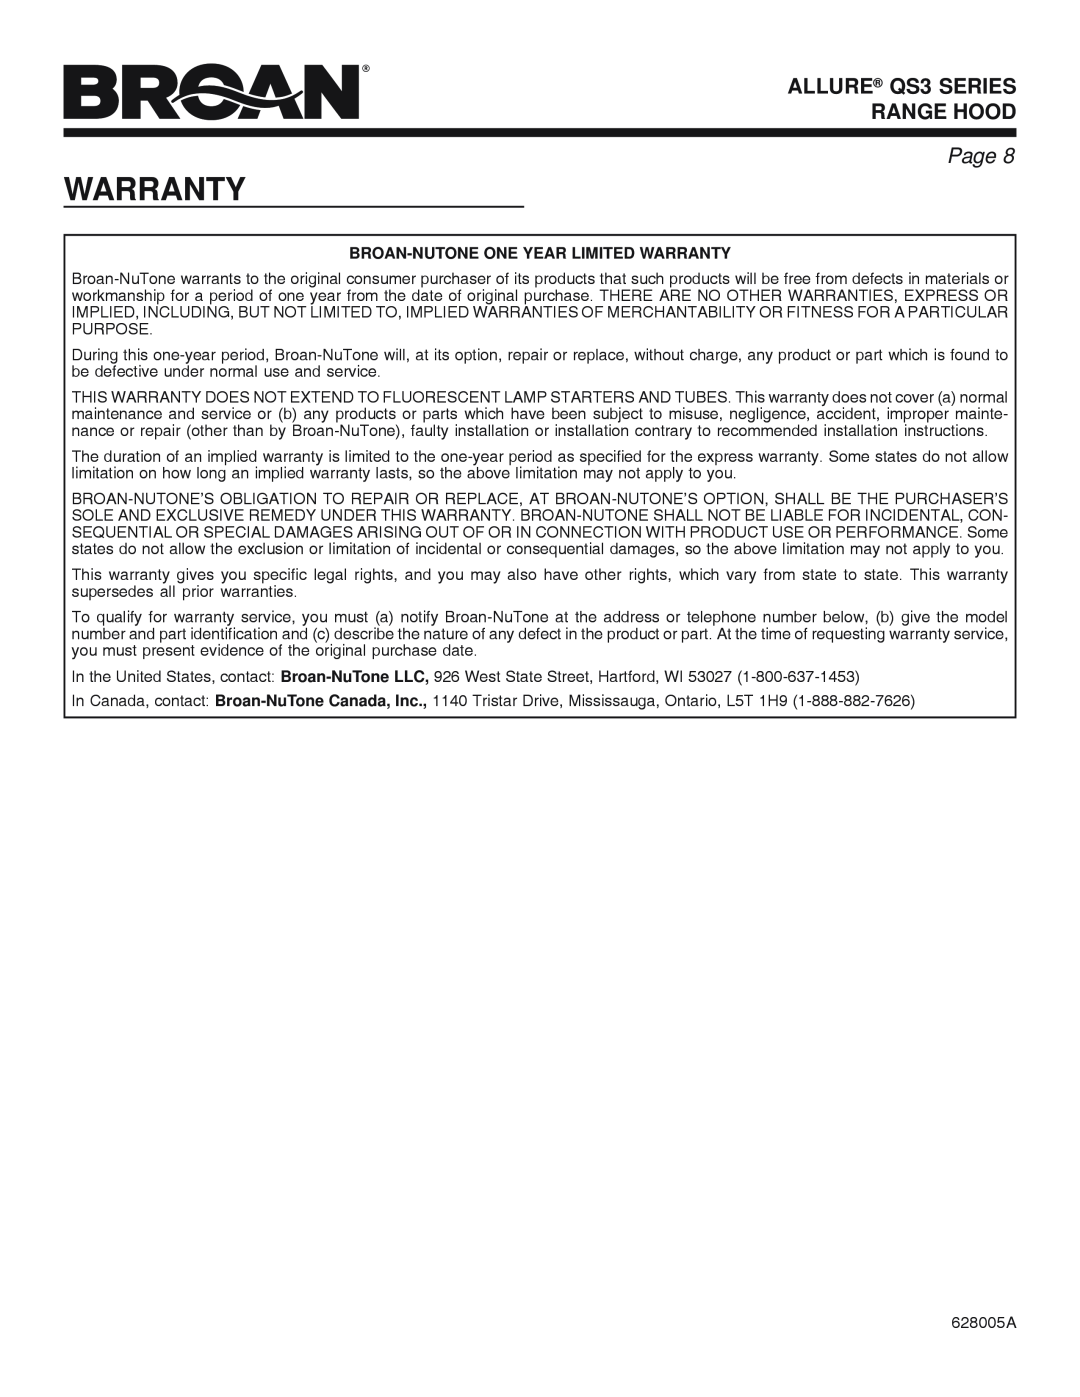 Broan manual ALLURE QS3 SERIES RANGE HOOD, Page, Broan-Nutoneone Year Limited Warranty 